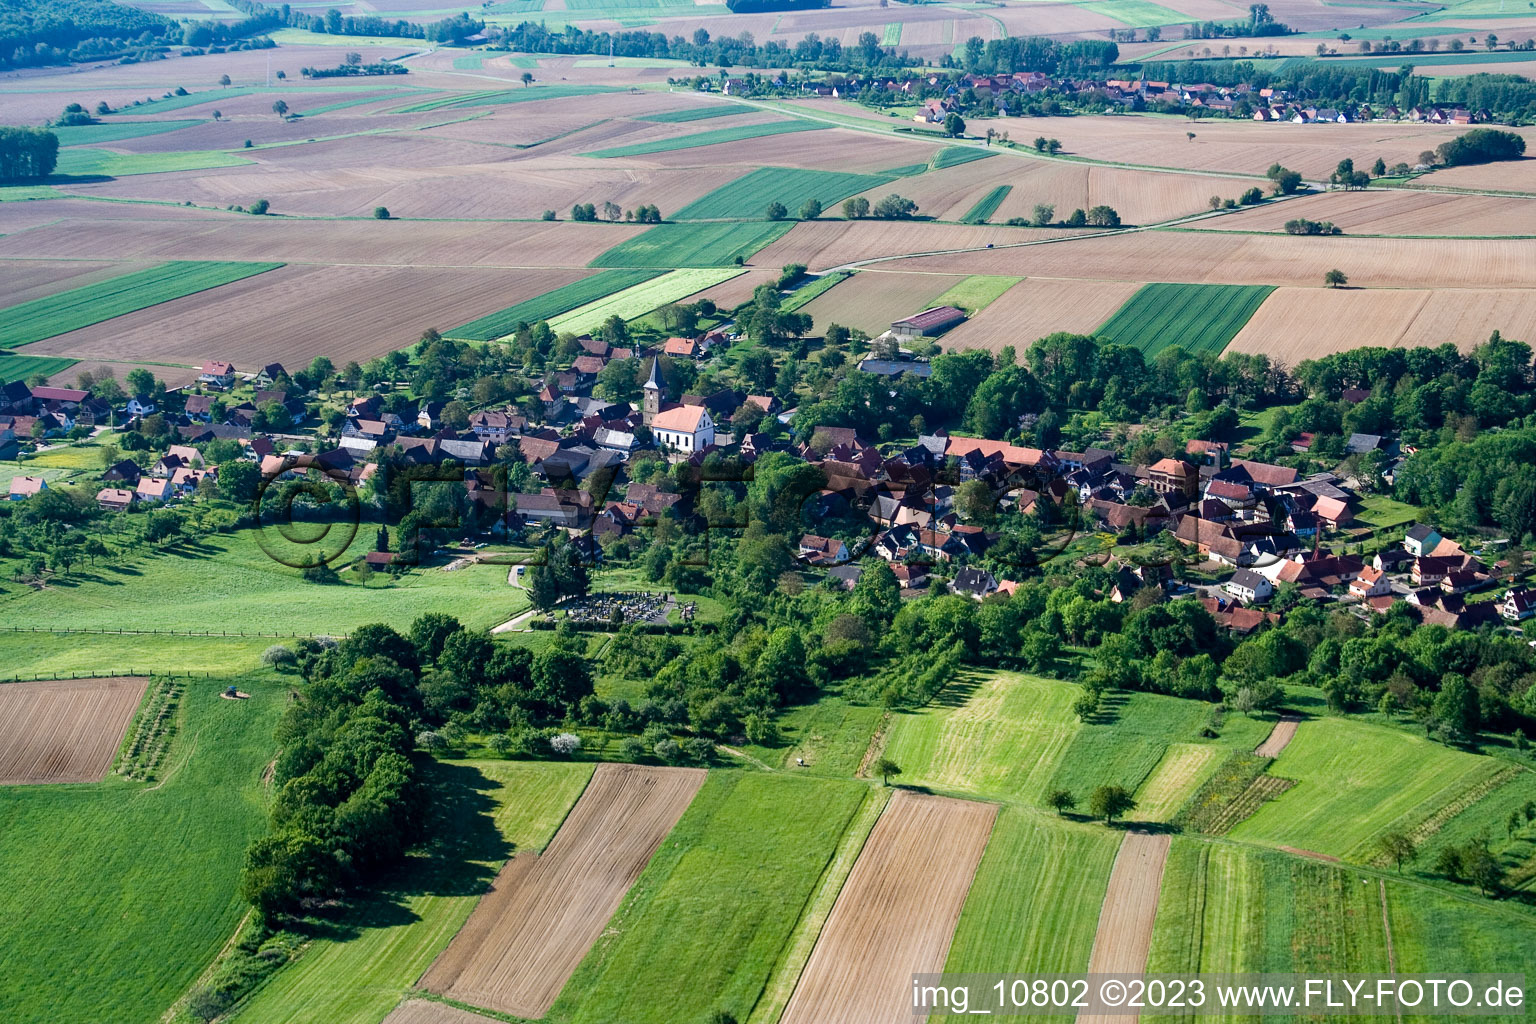 Drachenbronn-Birlenbach in the state Bas-Rhin, France seen from a drone